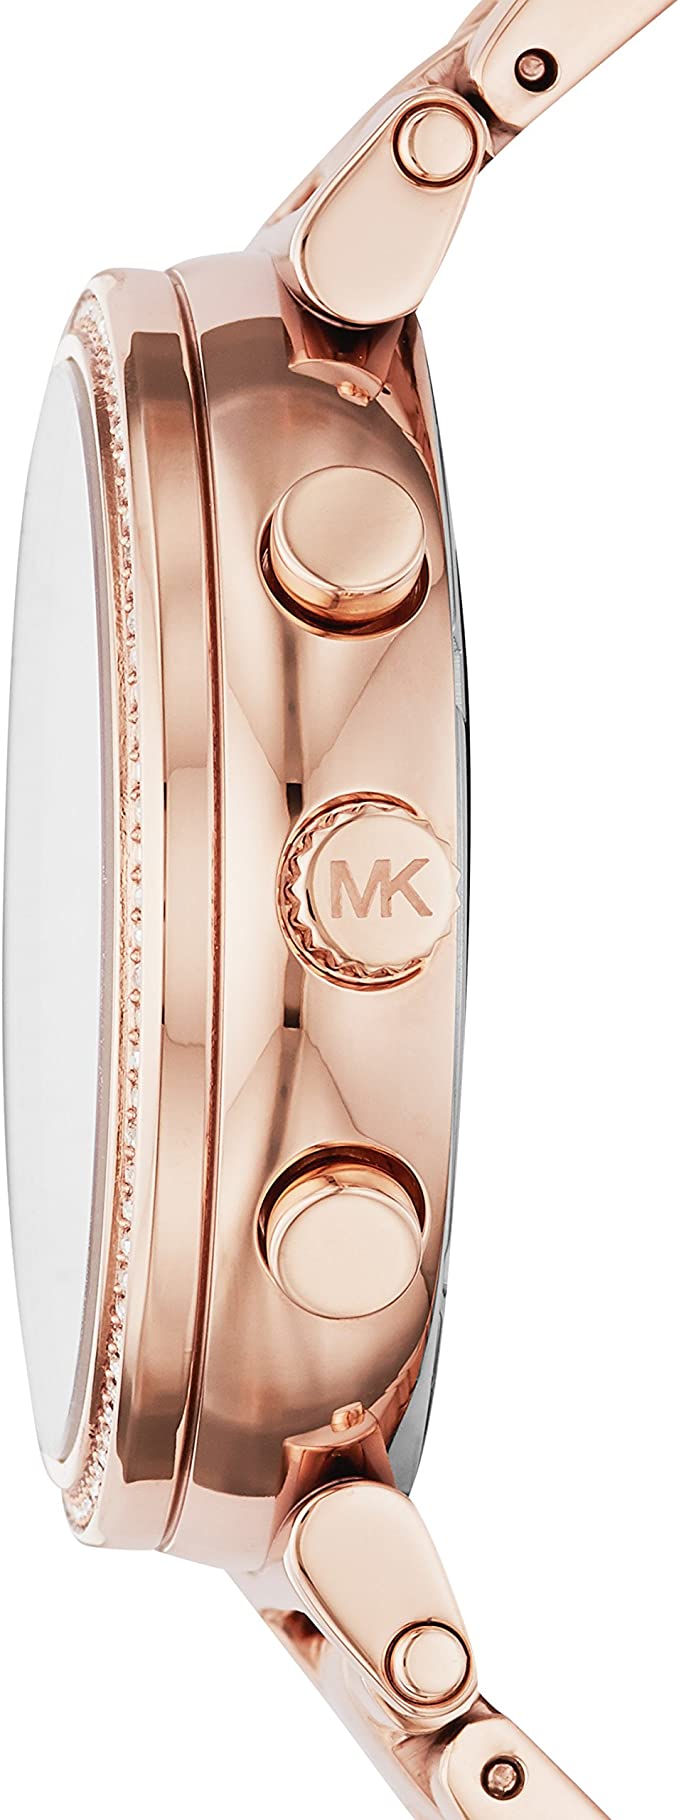 Michael Kors Sofie Chronograph Crystal Mother of Peal Dial Ladies Watch MK6576